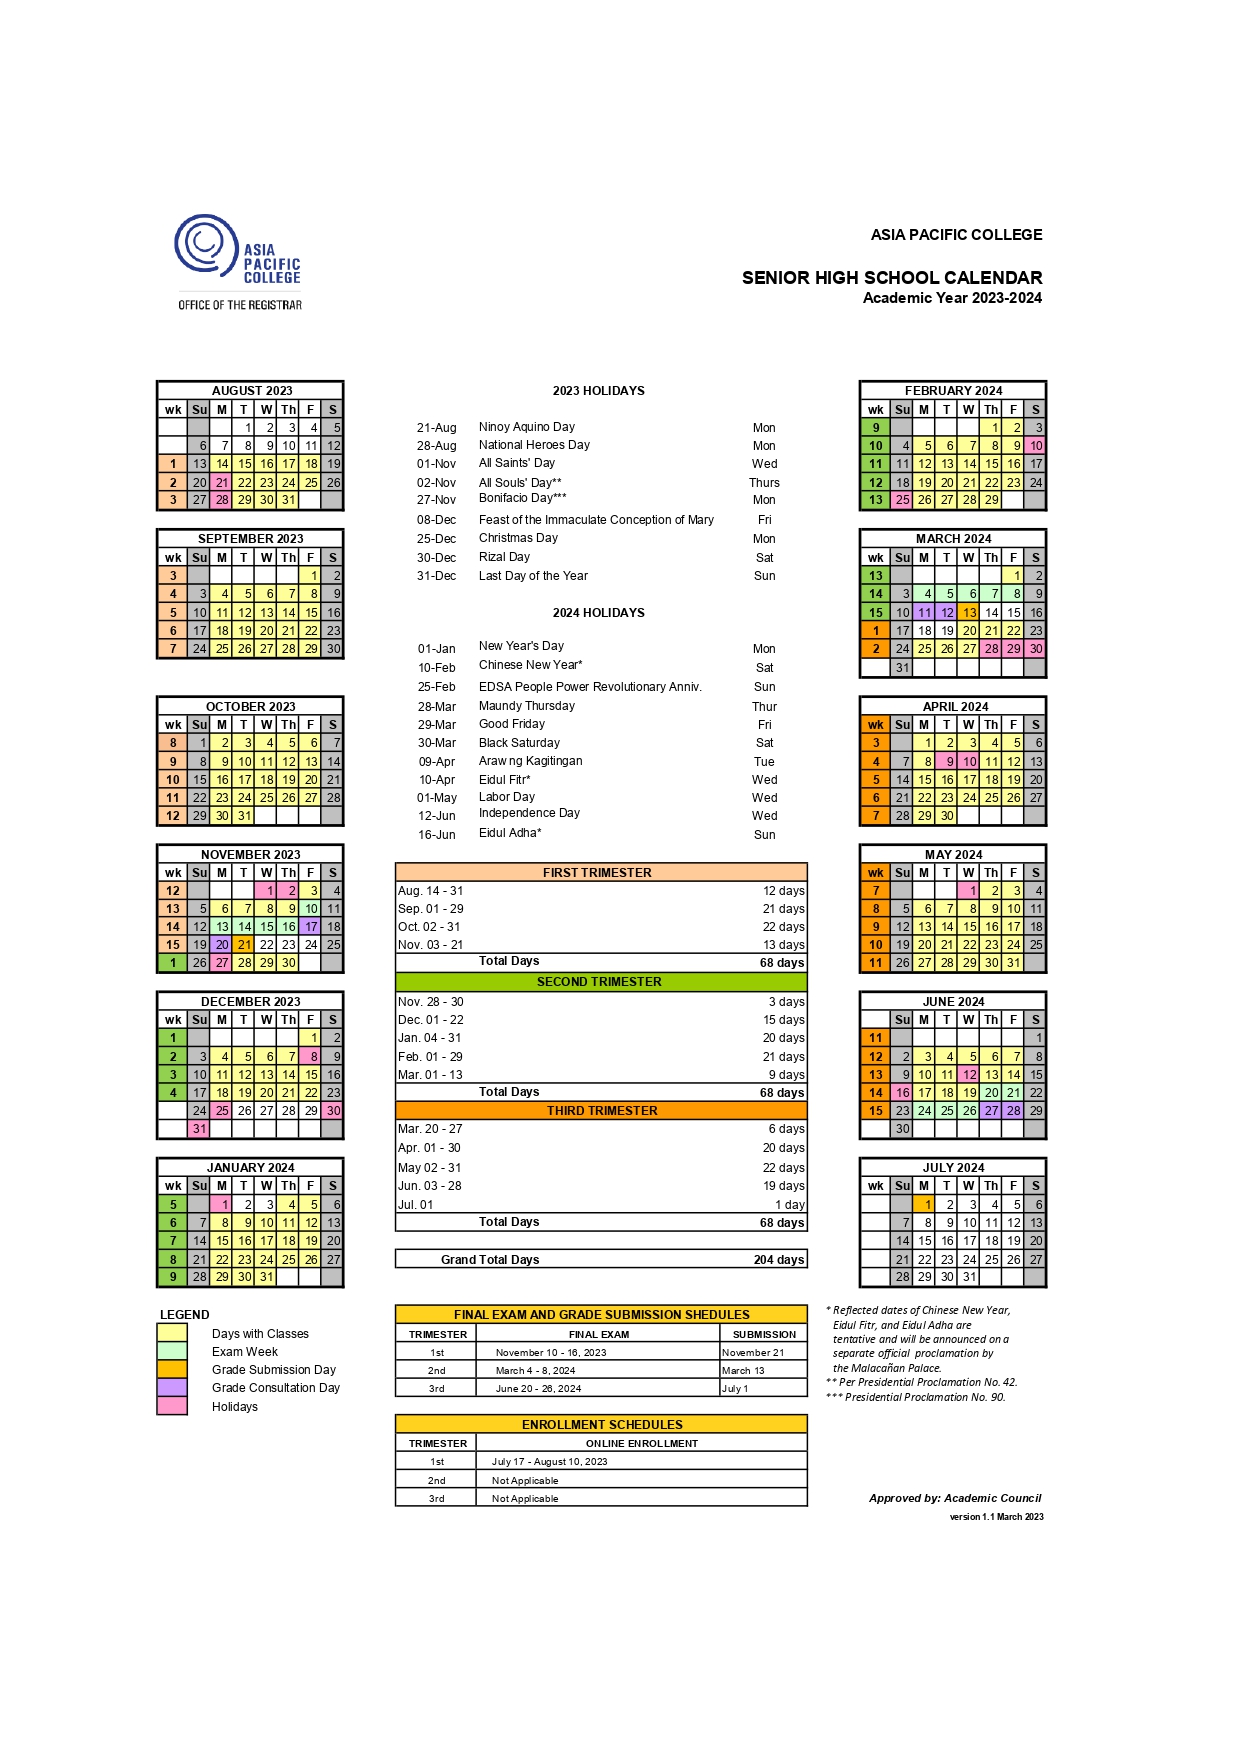 APC Senior High School Calendar 2023-24 v1.1._page-0001